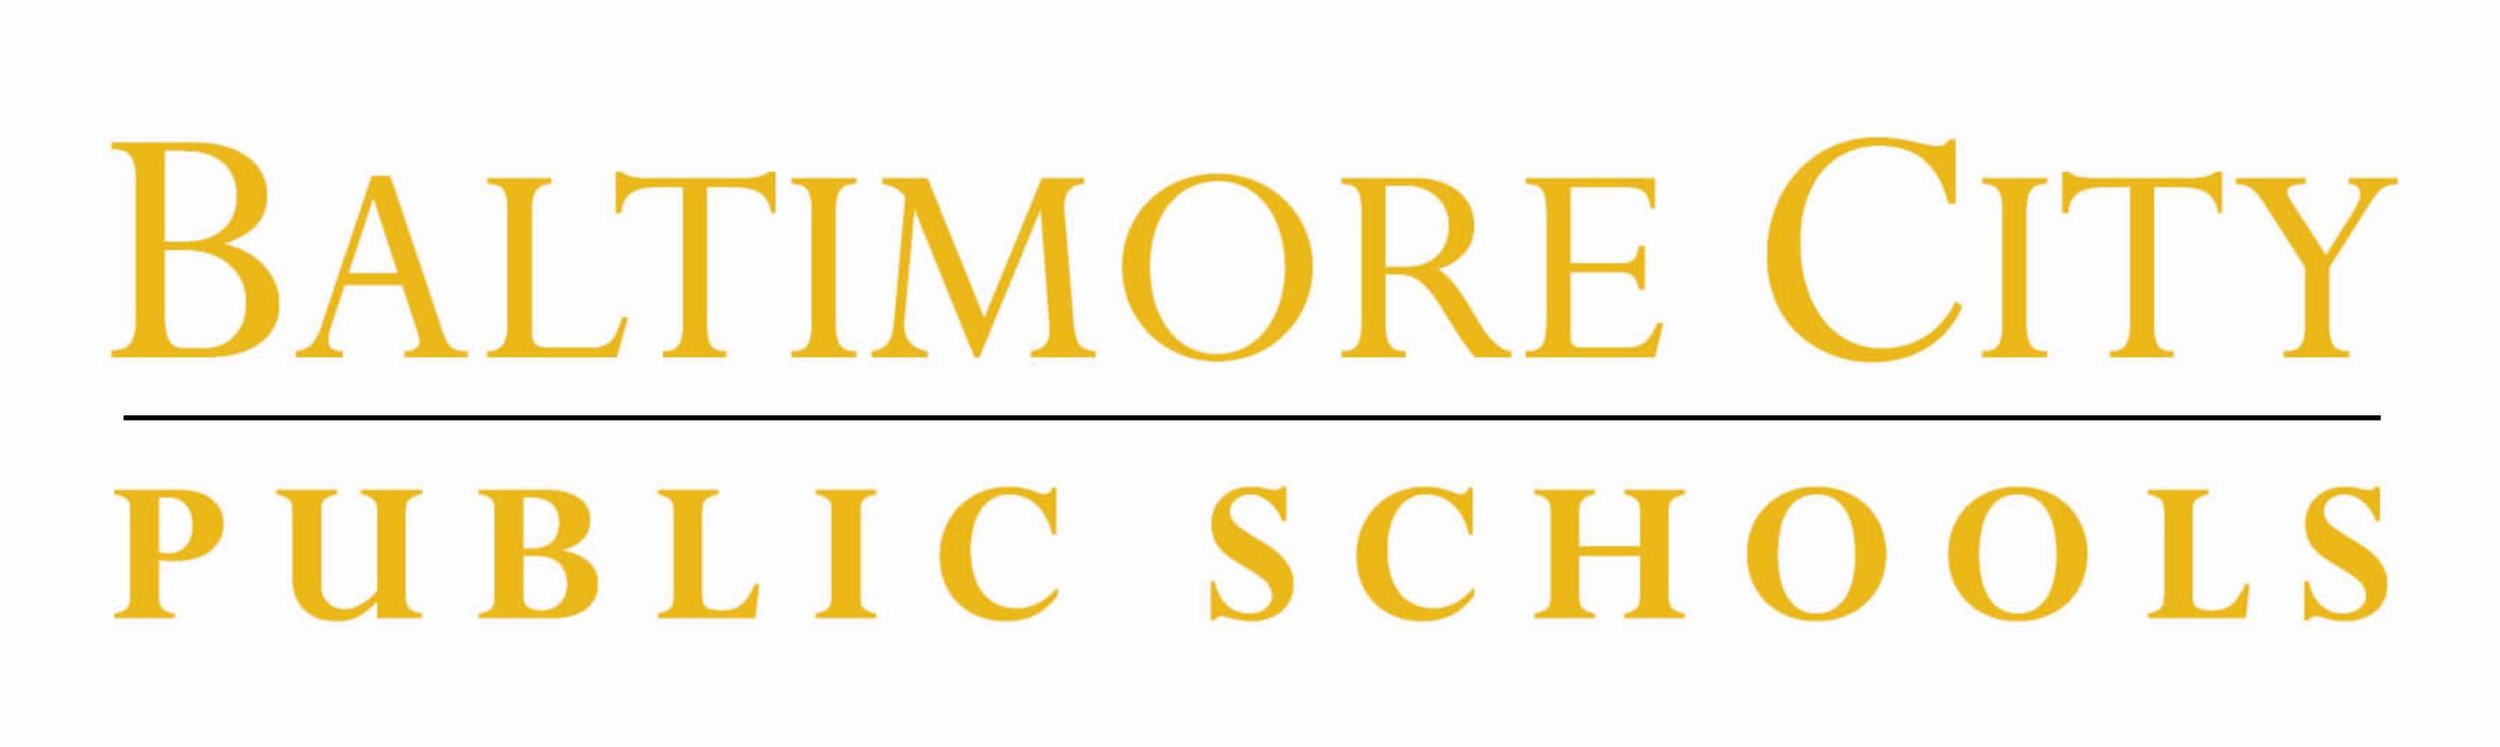 Baltimore_City_Public_Schools_logo.jpg